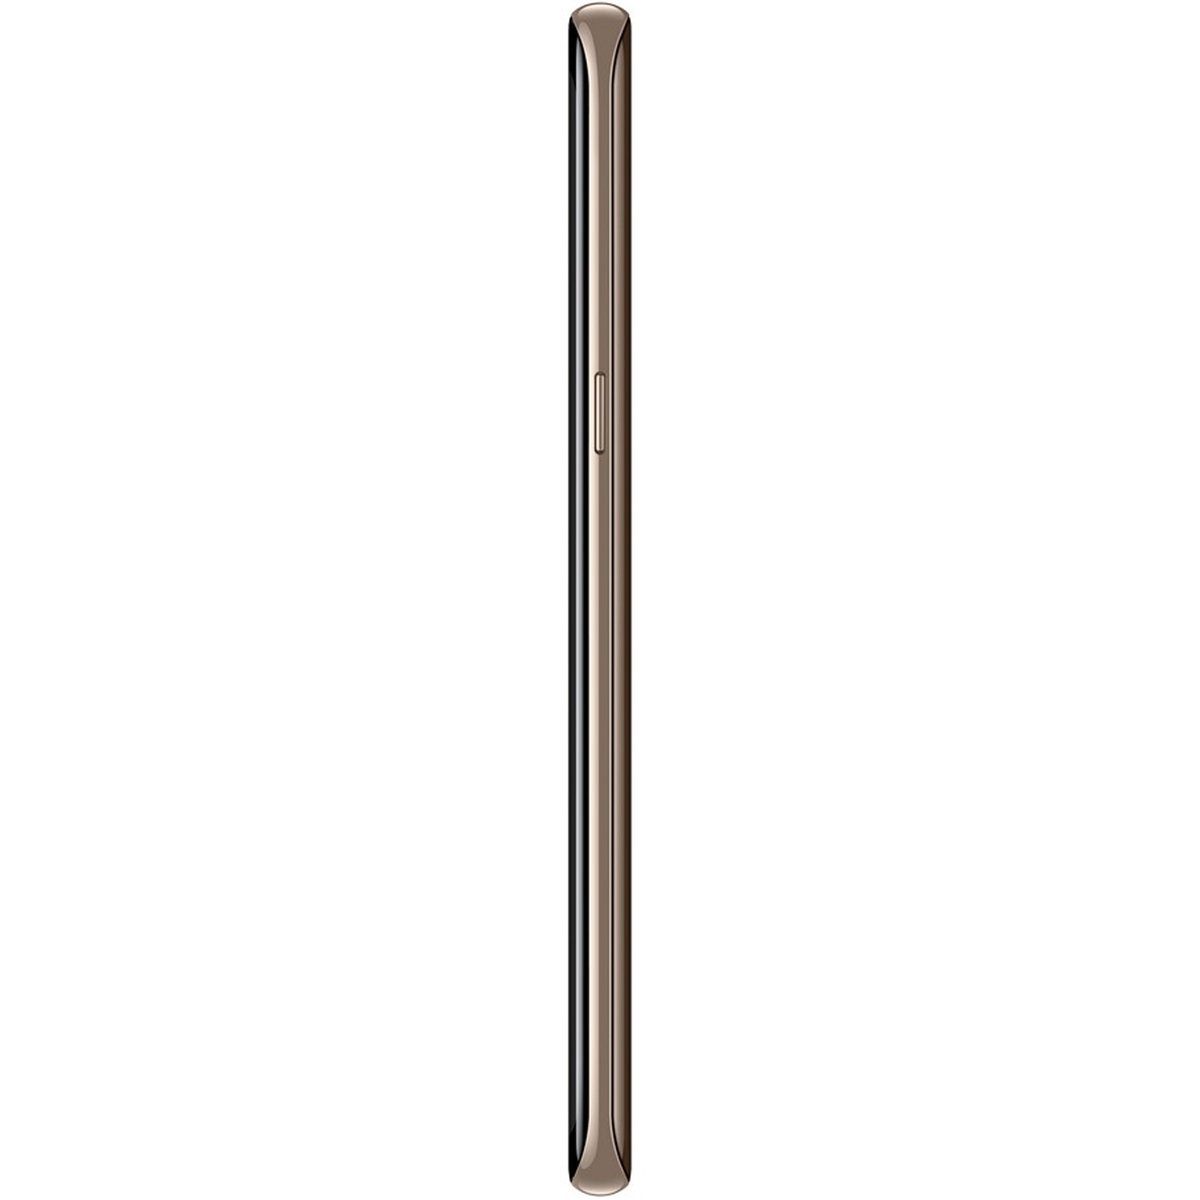 Samsung Galaxy S8 SMG950F Maple Gold